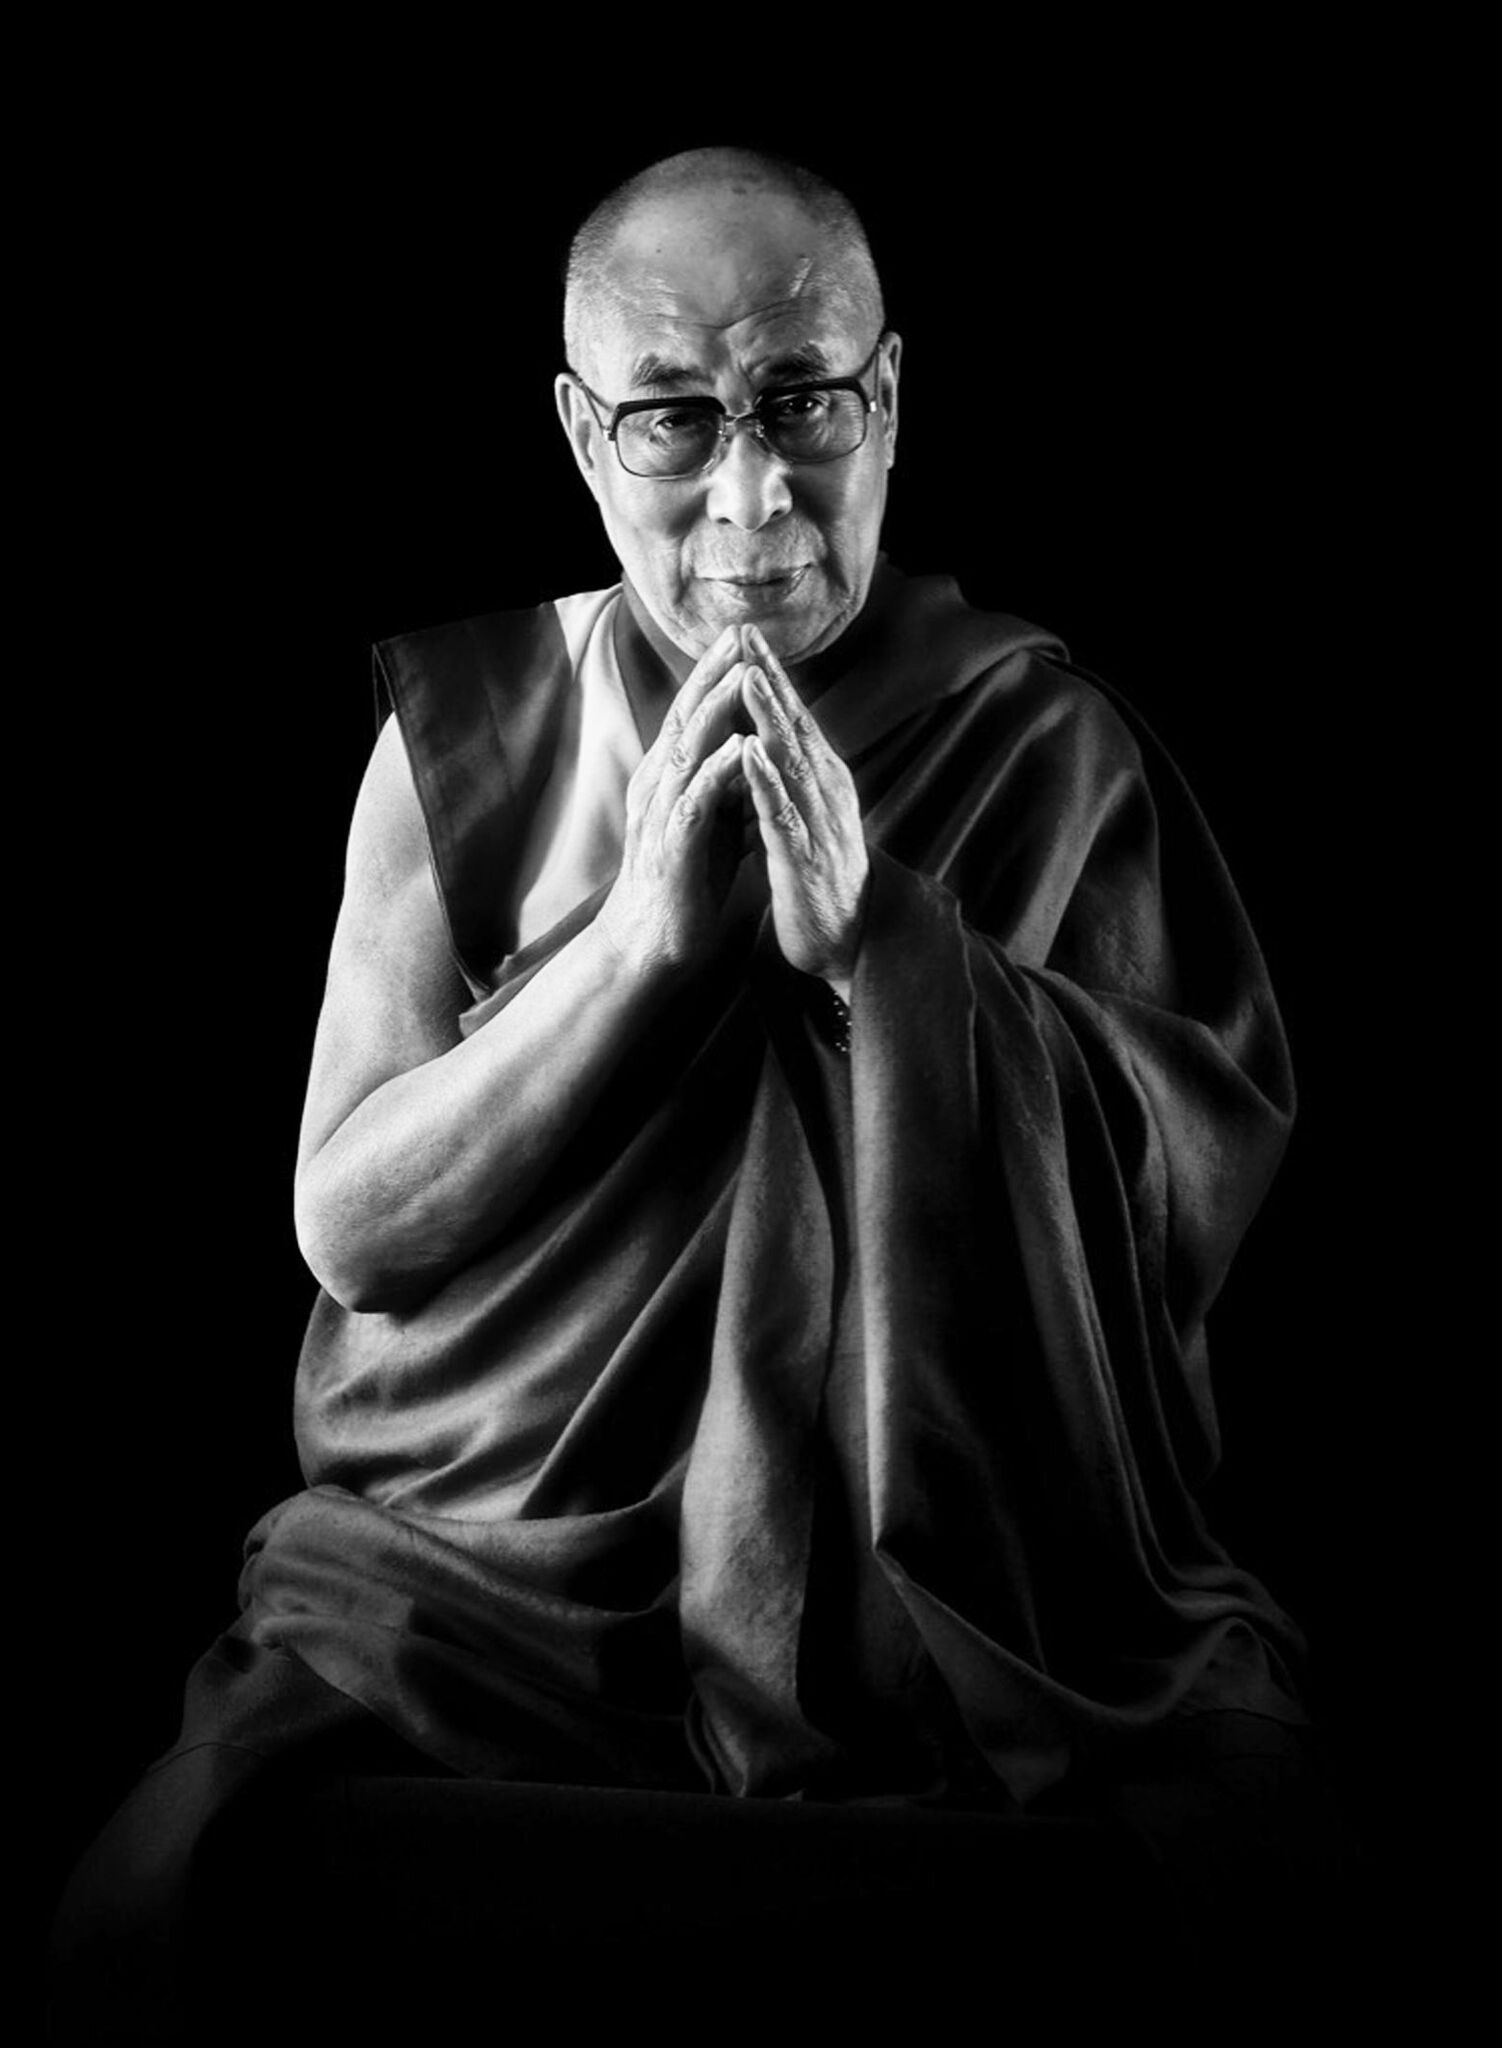 Compassion (Dalai Lama) by Chris Levine